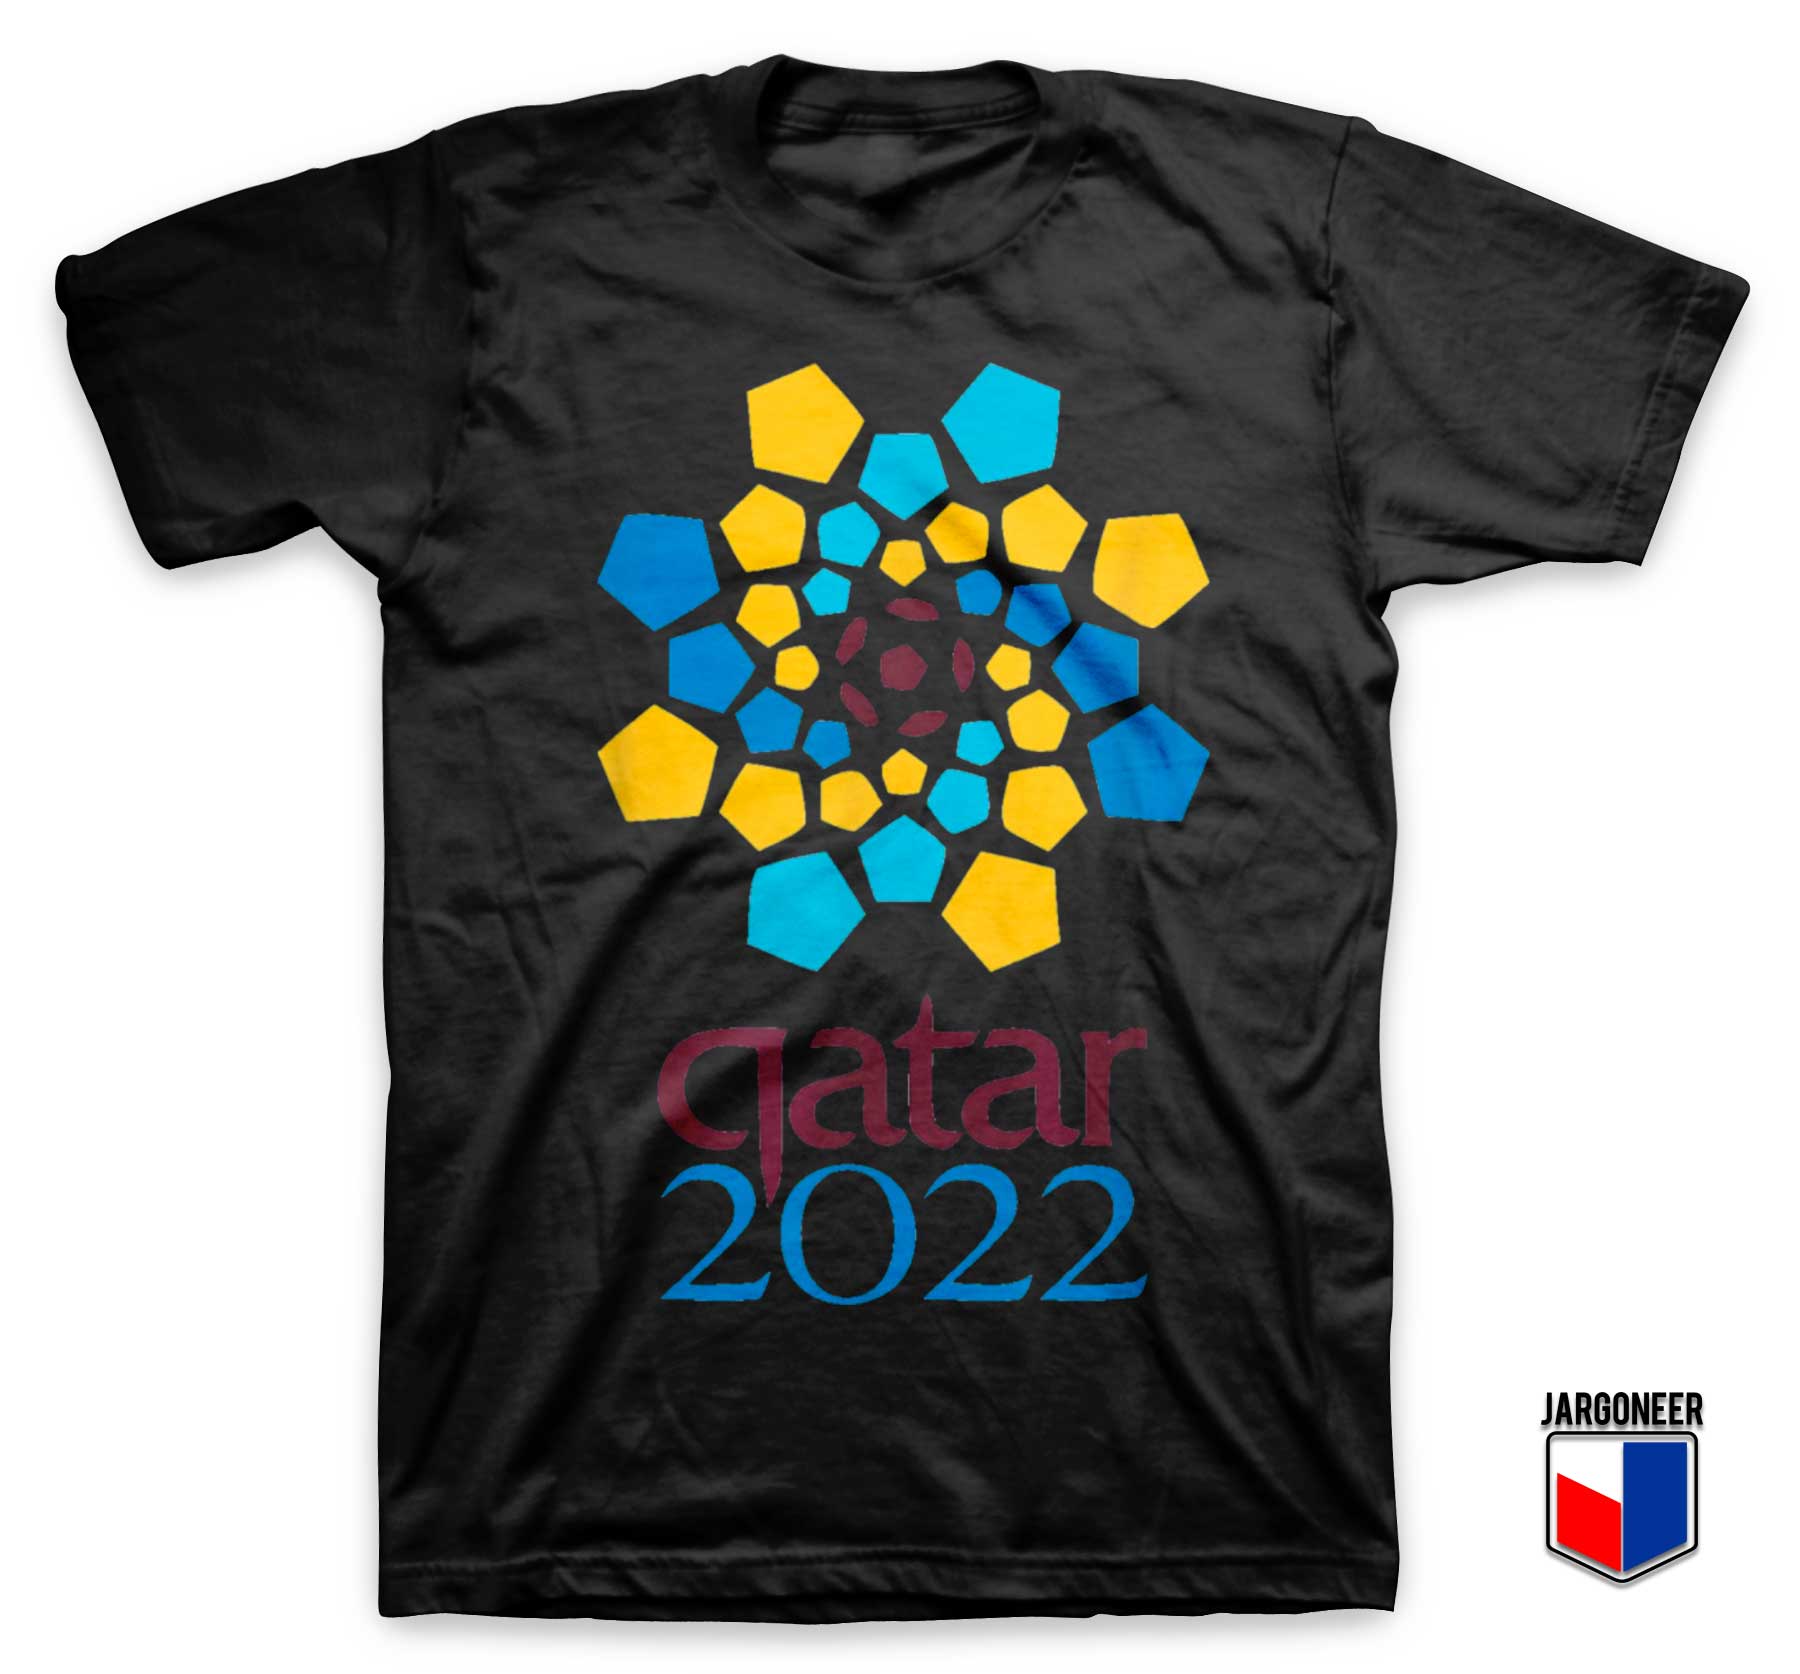 Euforia Qatar 2022 T Shirt - Shop Unique Graphic Cool Shirt Designs